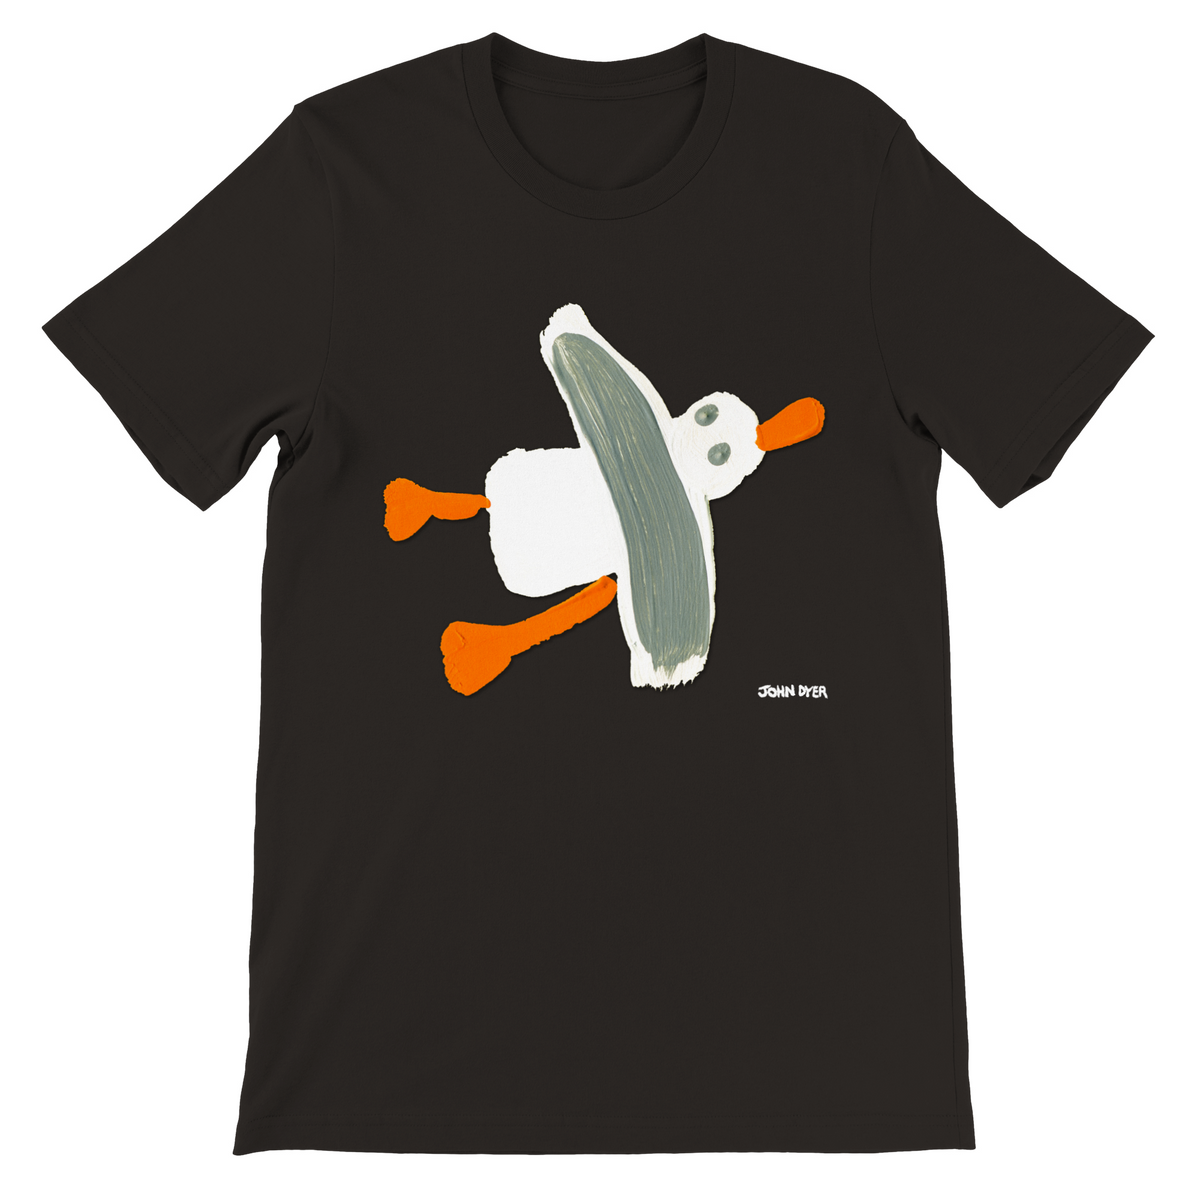 Black Cornish seagull t-shirt by artist John Dyer. Cornwall beach wear..